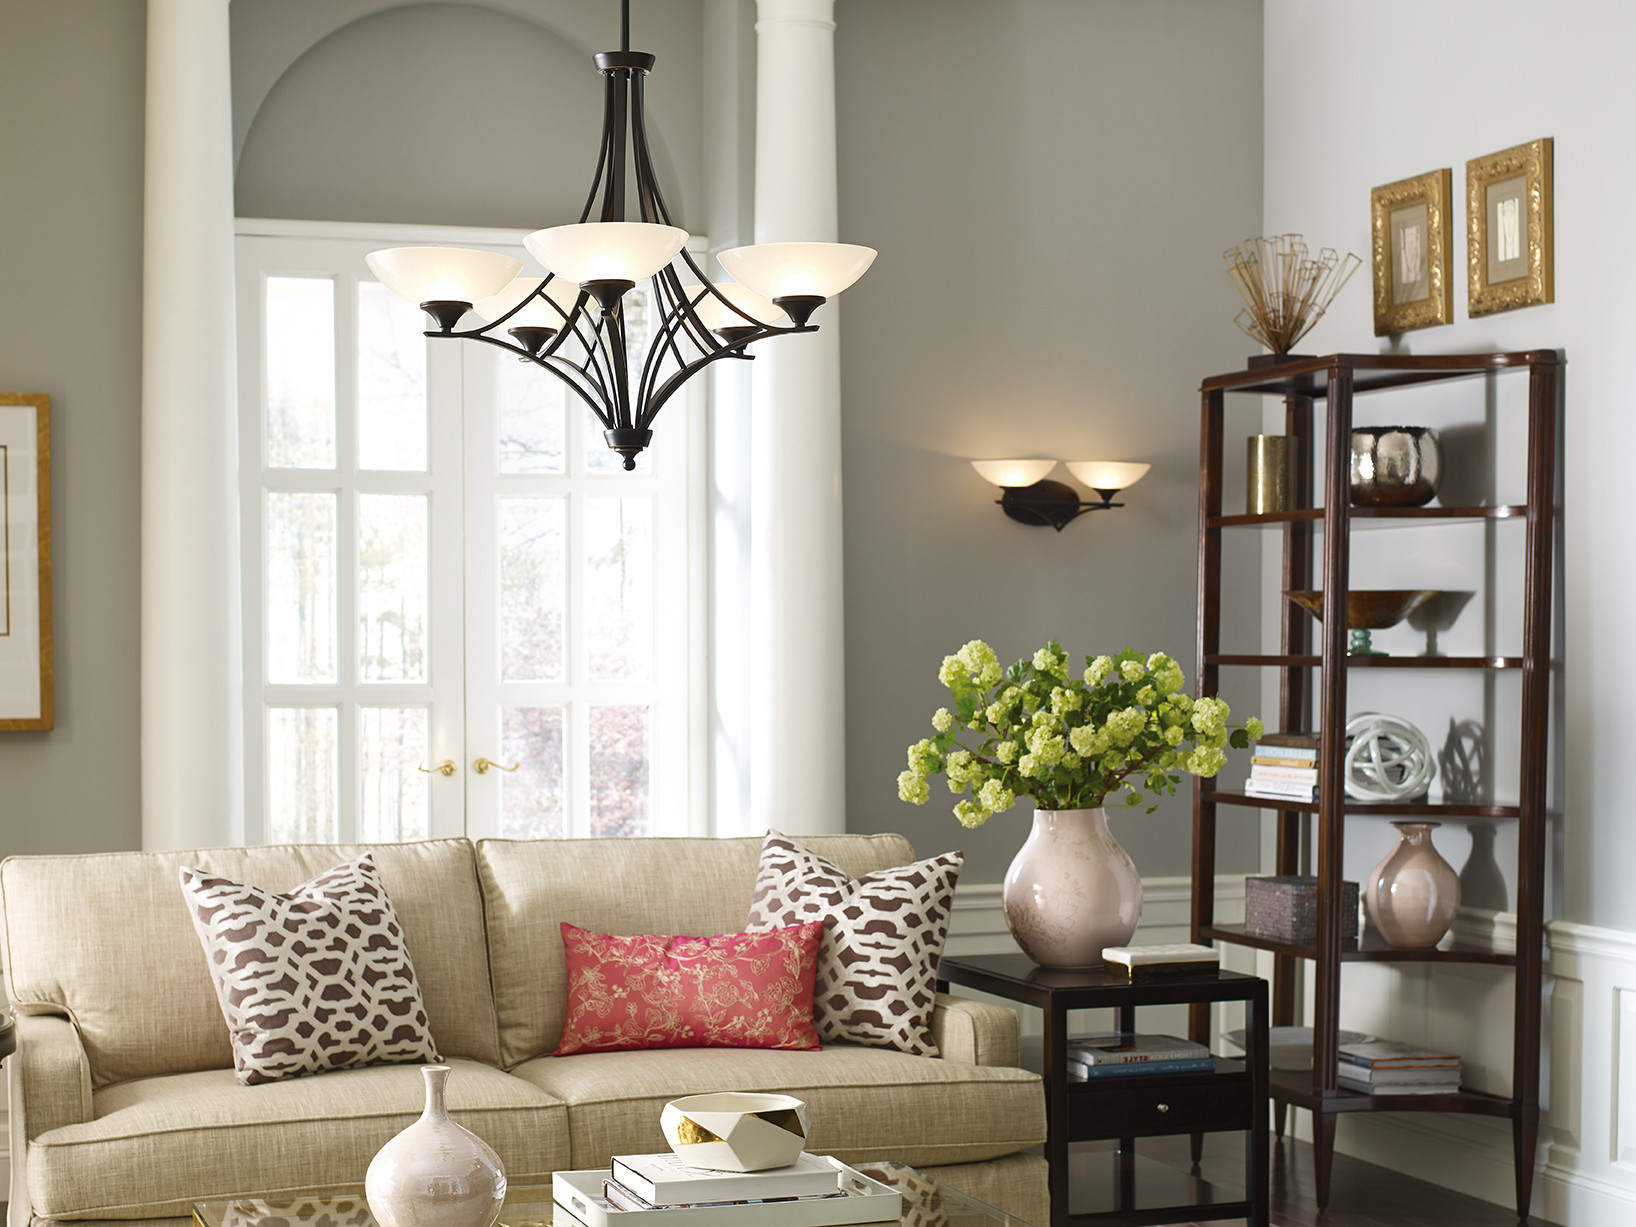 Living Room Lamp Ideas
 Lamps for Living Room Lighting Ideas